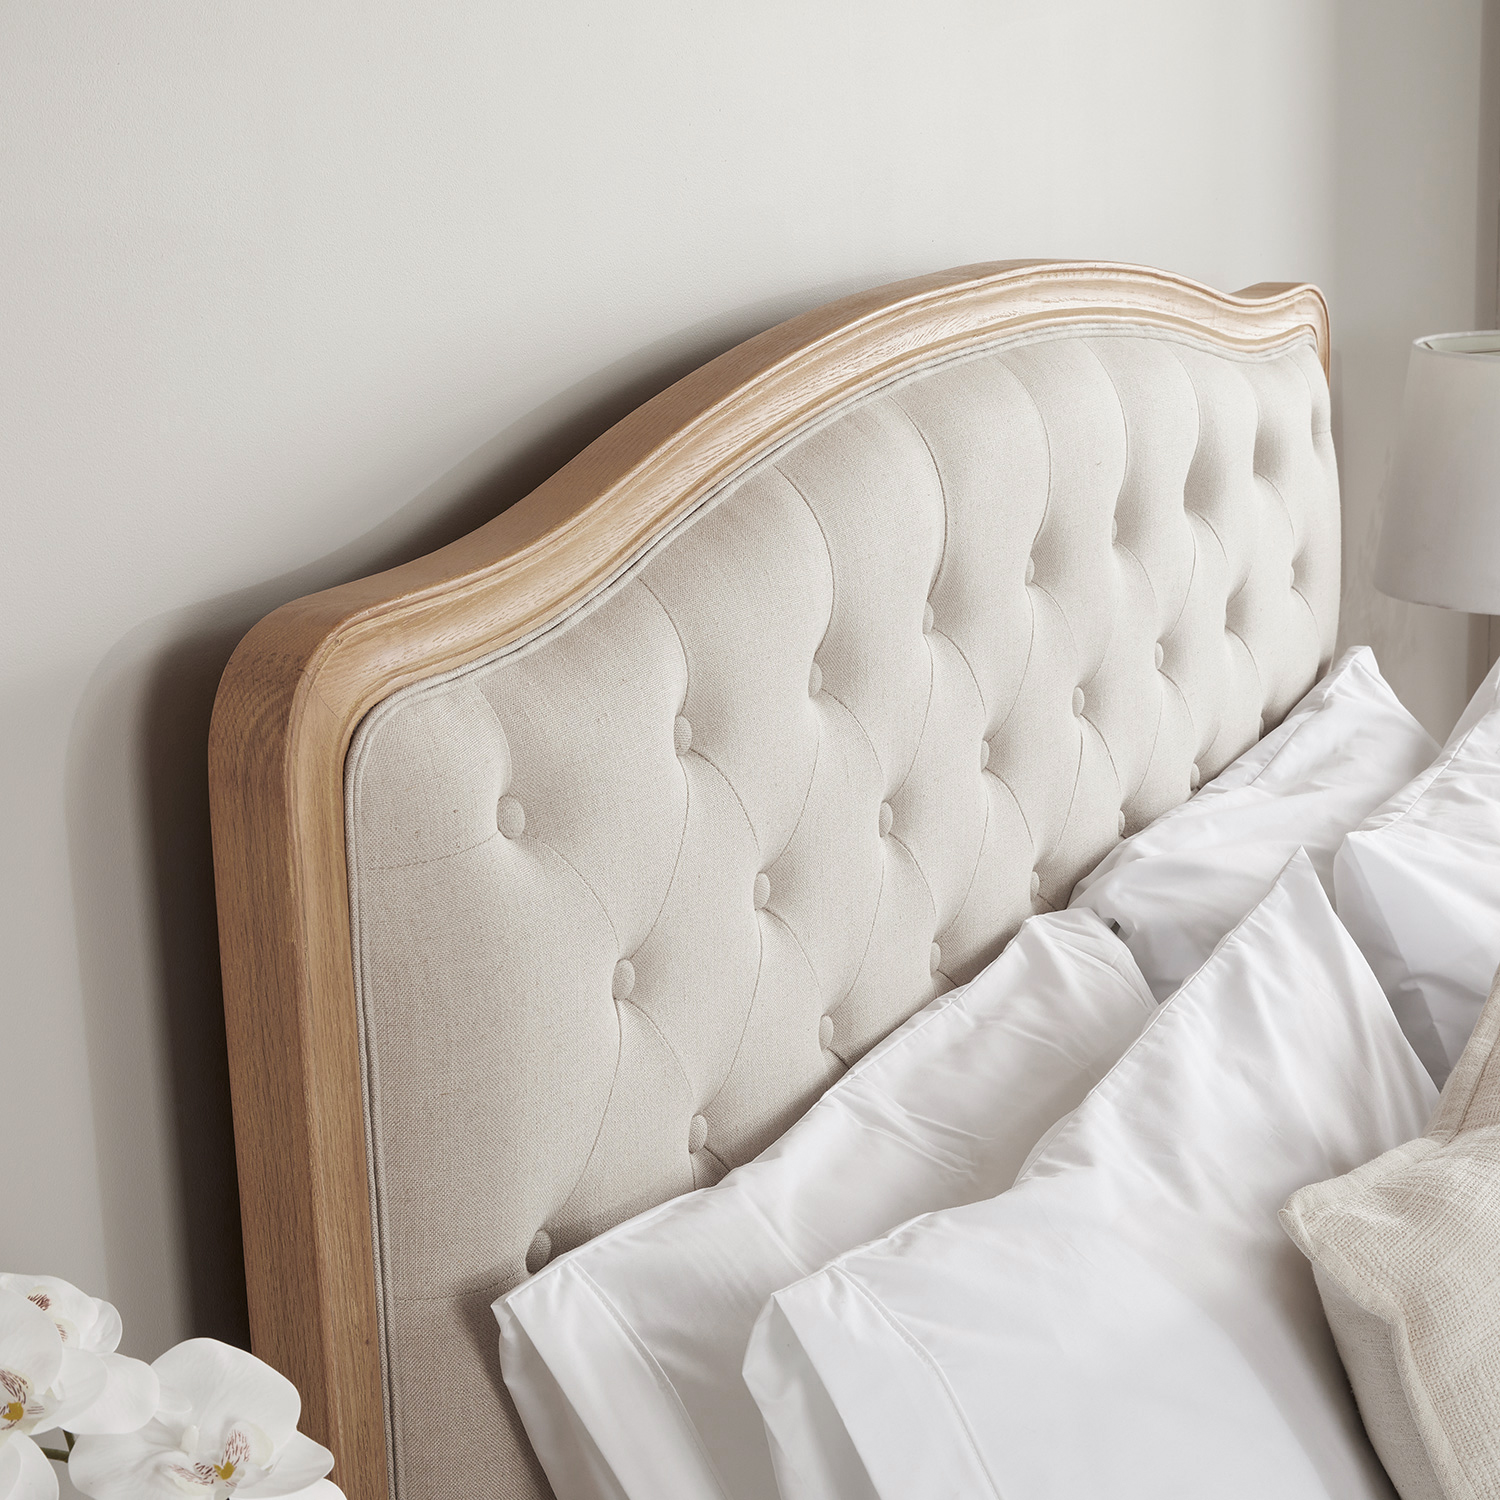 Celeste French Light Oak Buttoned Upholstered High Foot Board Bed – Super King Size